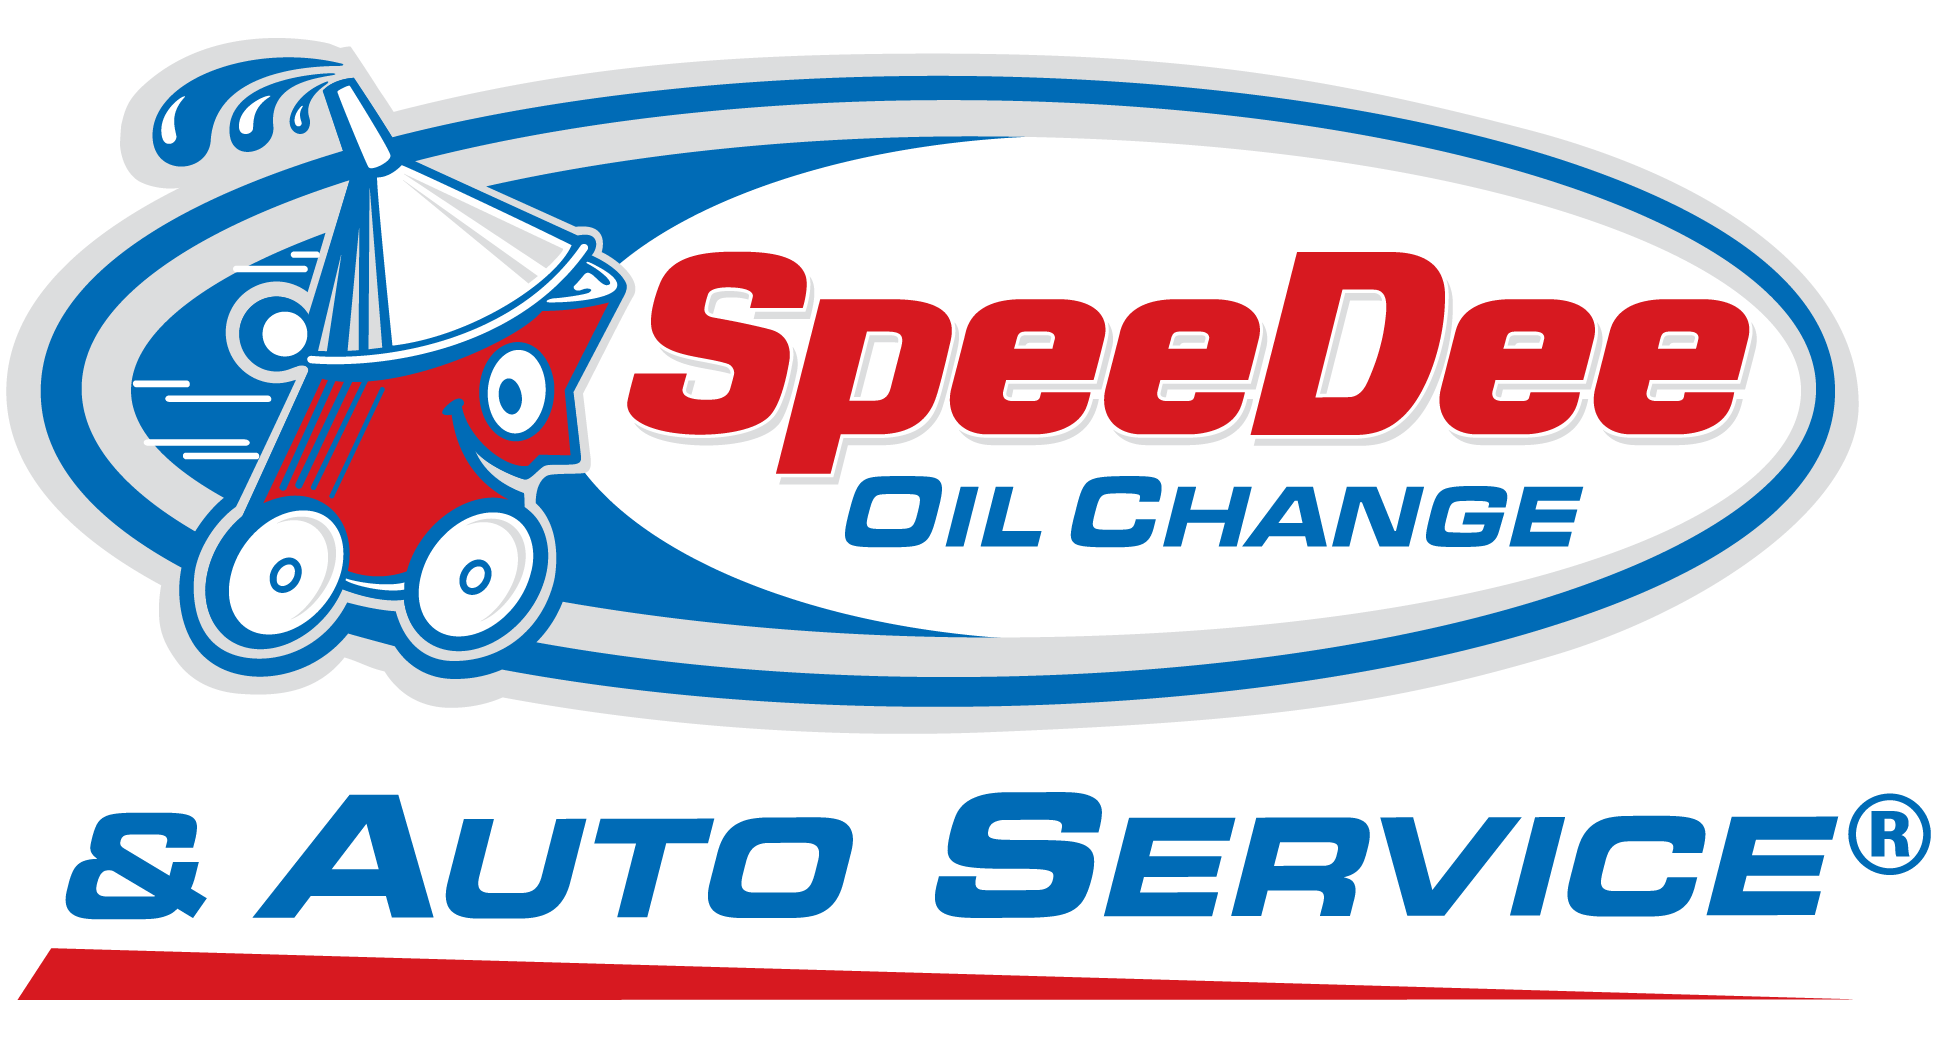 Old SpeeDee Oil Change logo shows Mr. Speedy, an anthropomorphic car wearing an oil funnel as a hat.